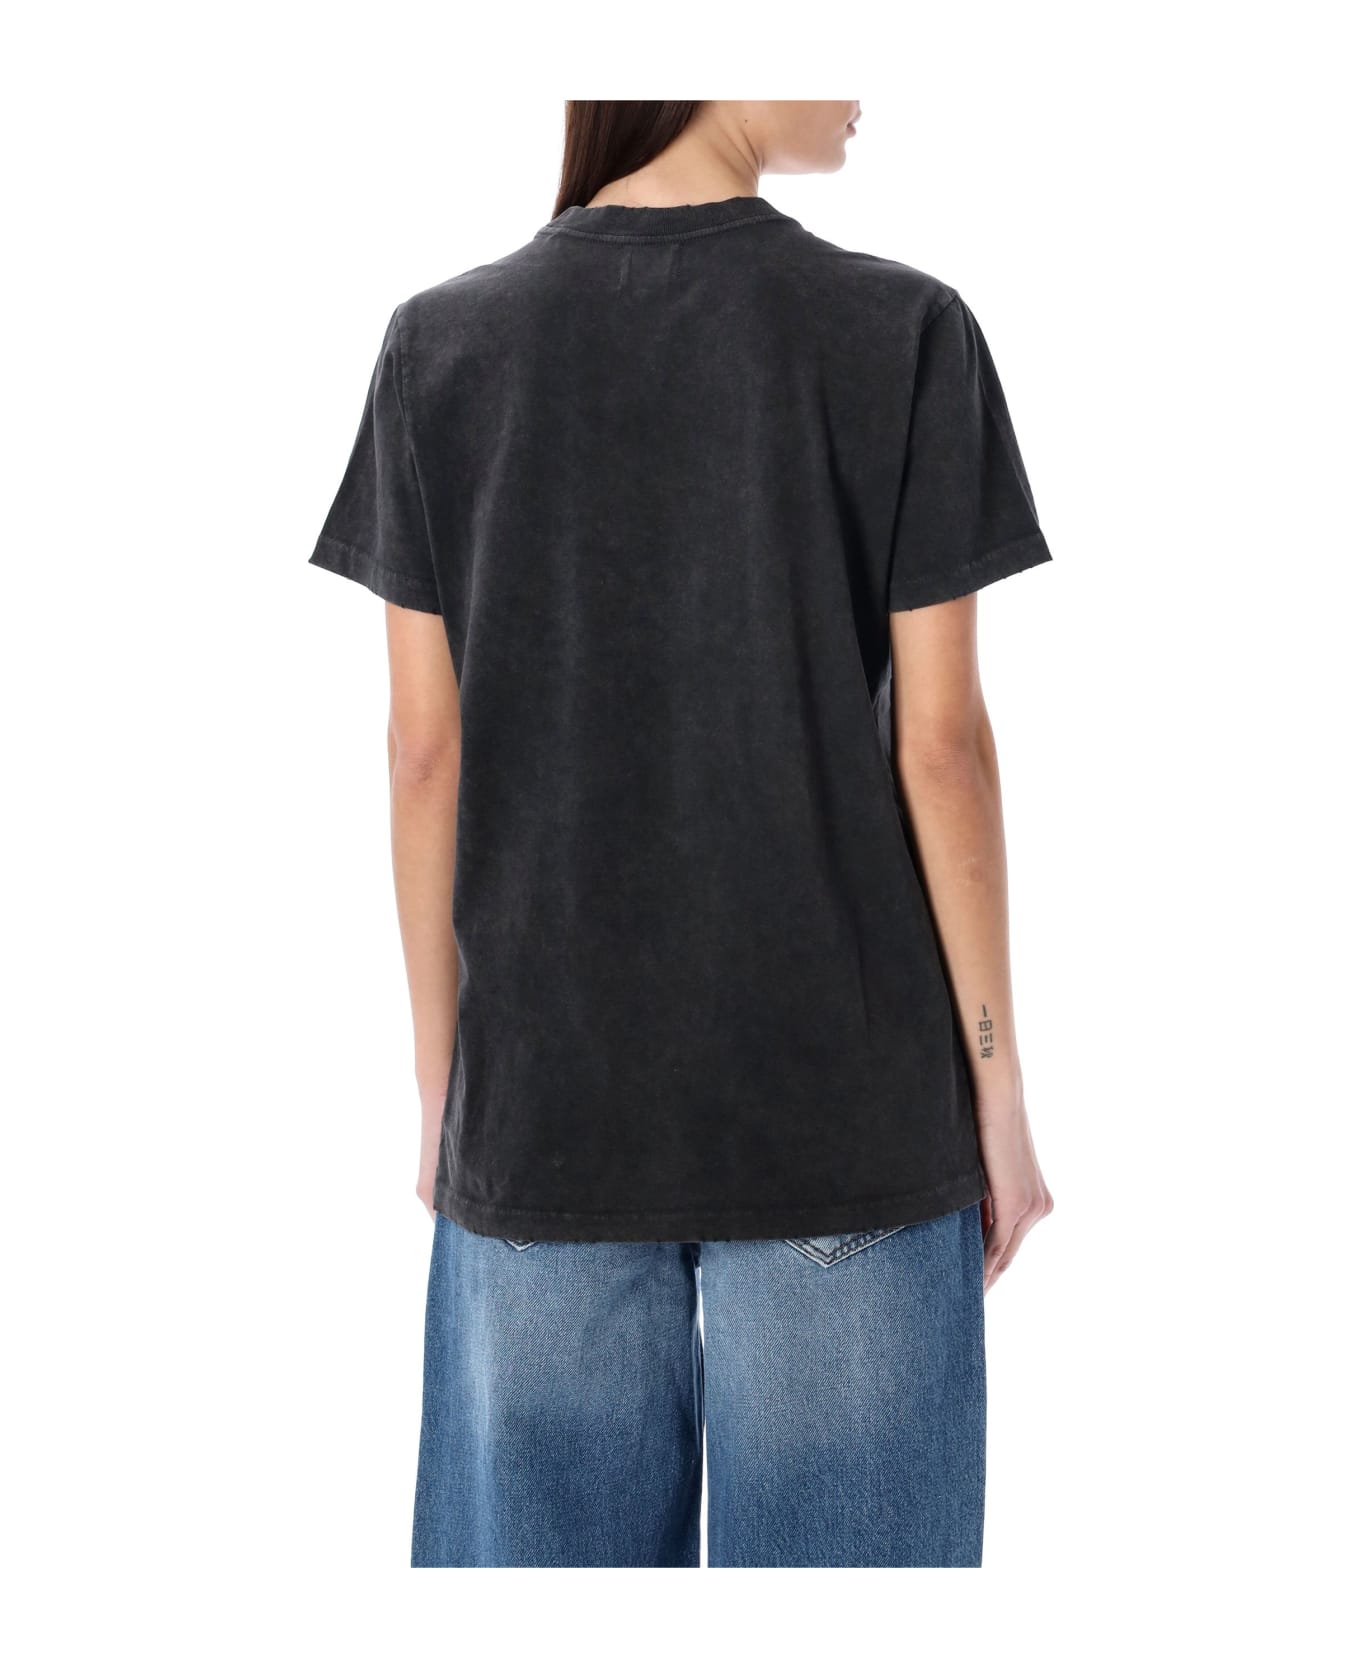 Marant Étoile 'zoeline' T-shirt - FADED BLACK